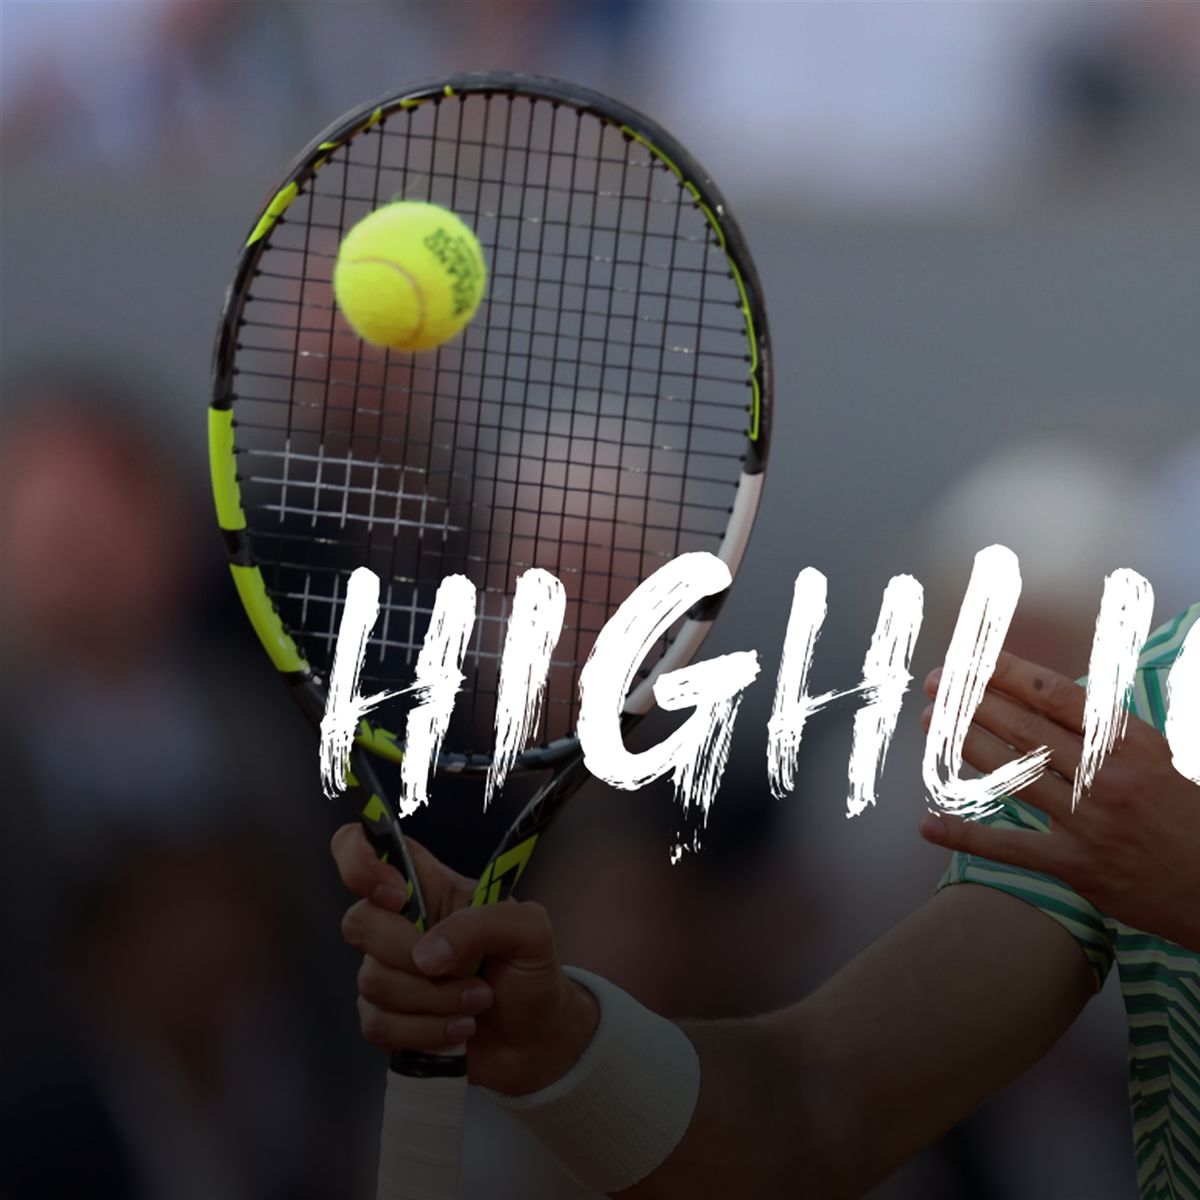 Carlos Alcaraz v Stefanos Tsitsipas - French Open 2023 highlights - Tennis video